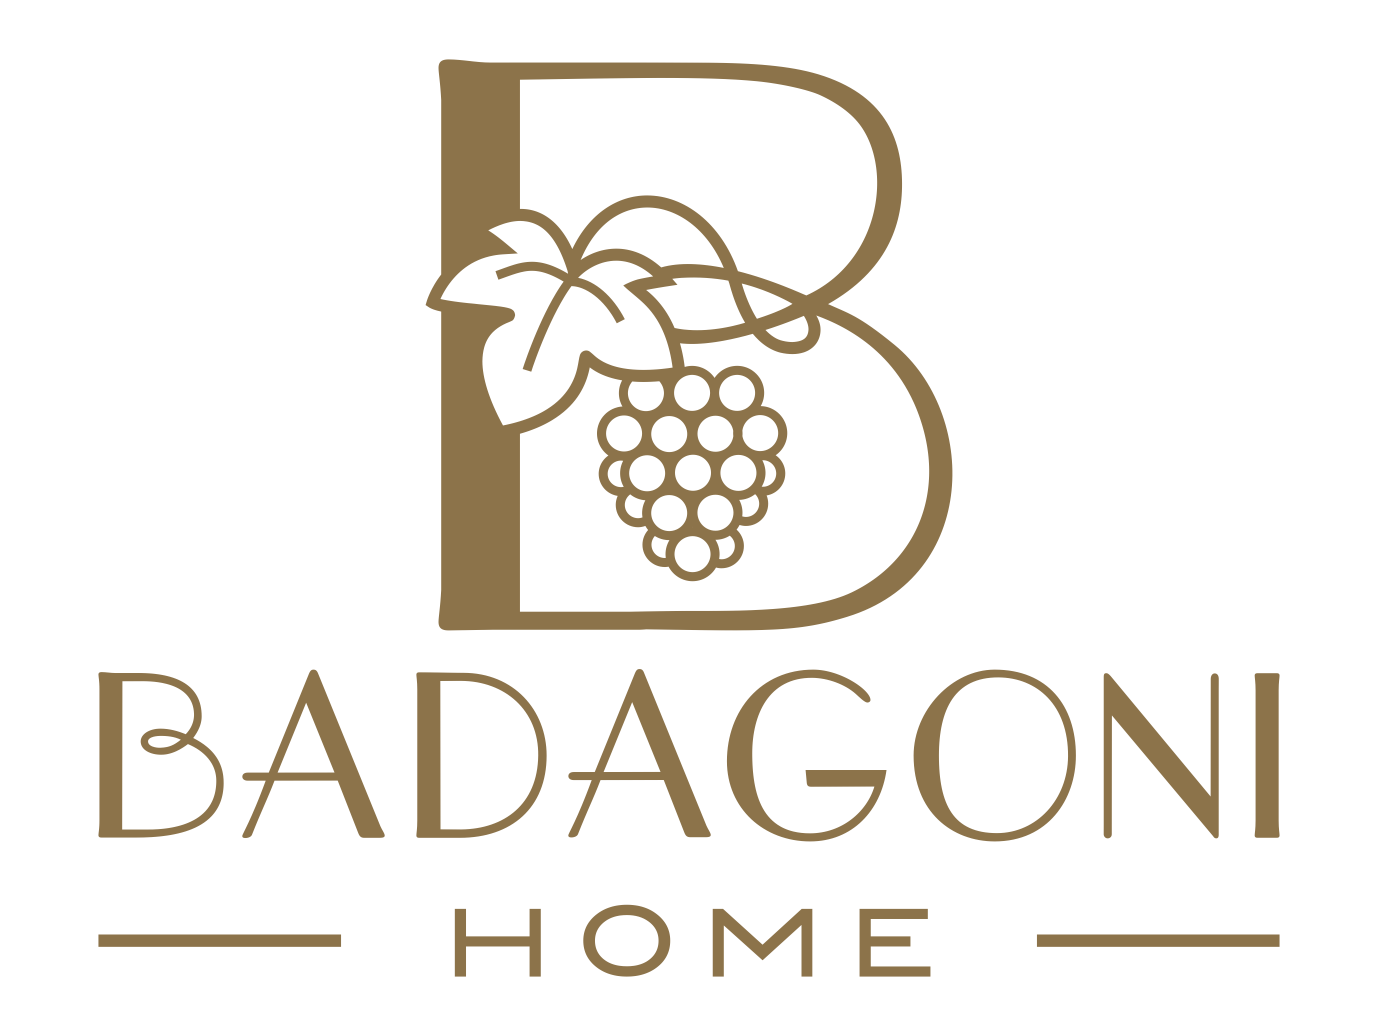 Badagoni Home – Georgian Restaurant